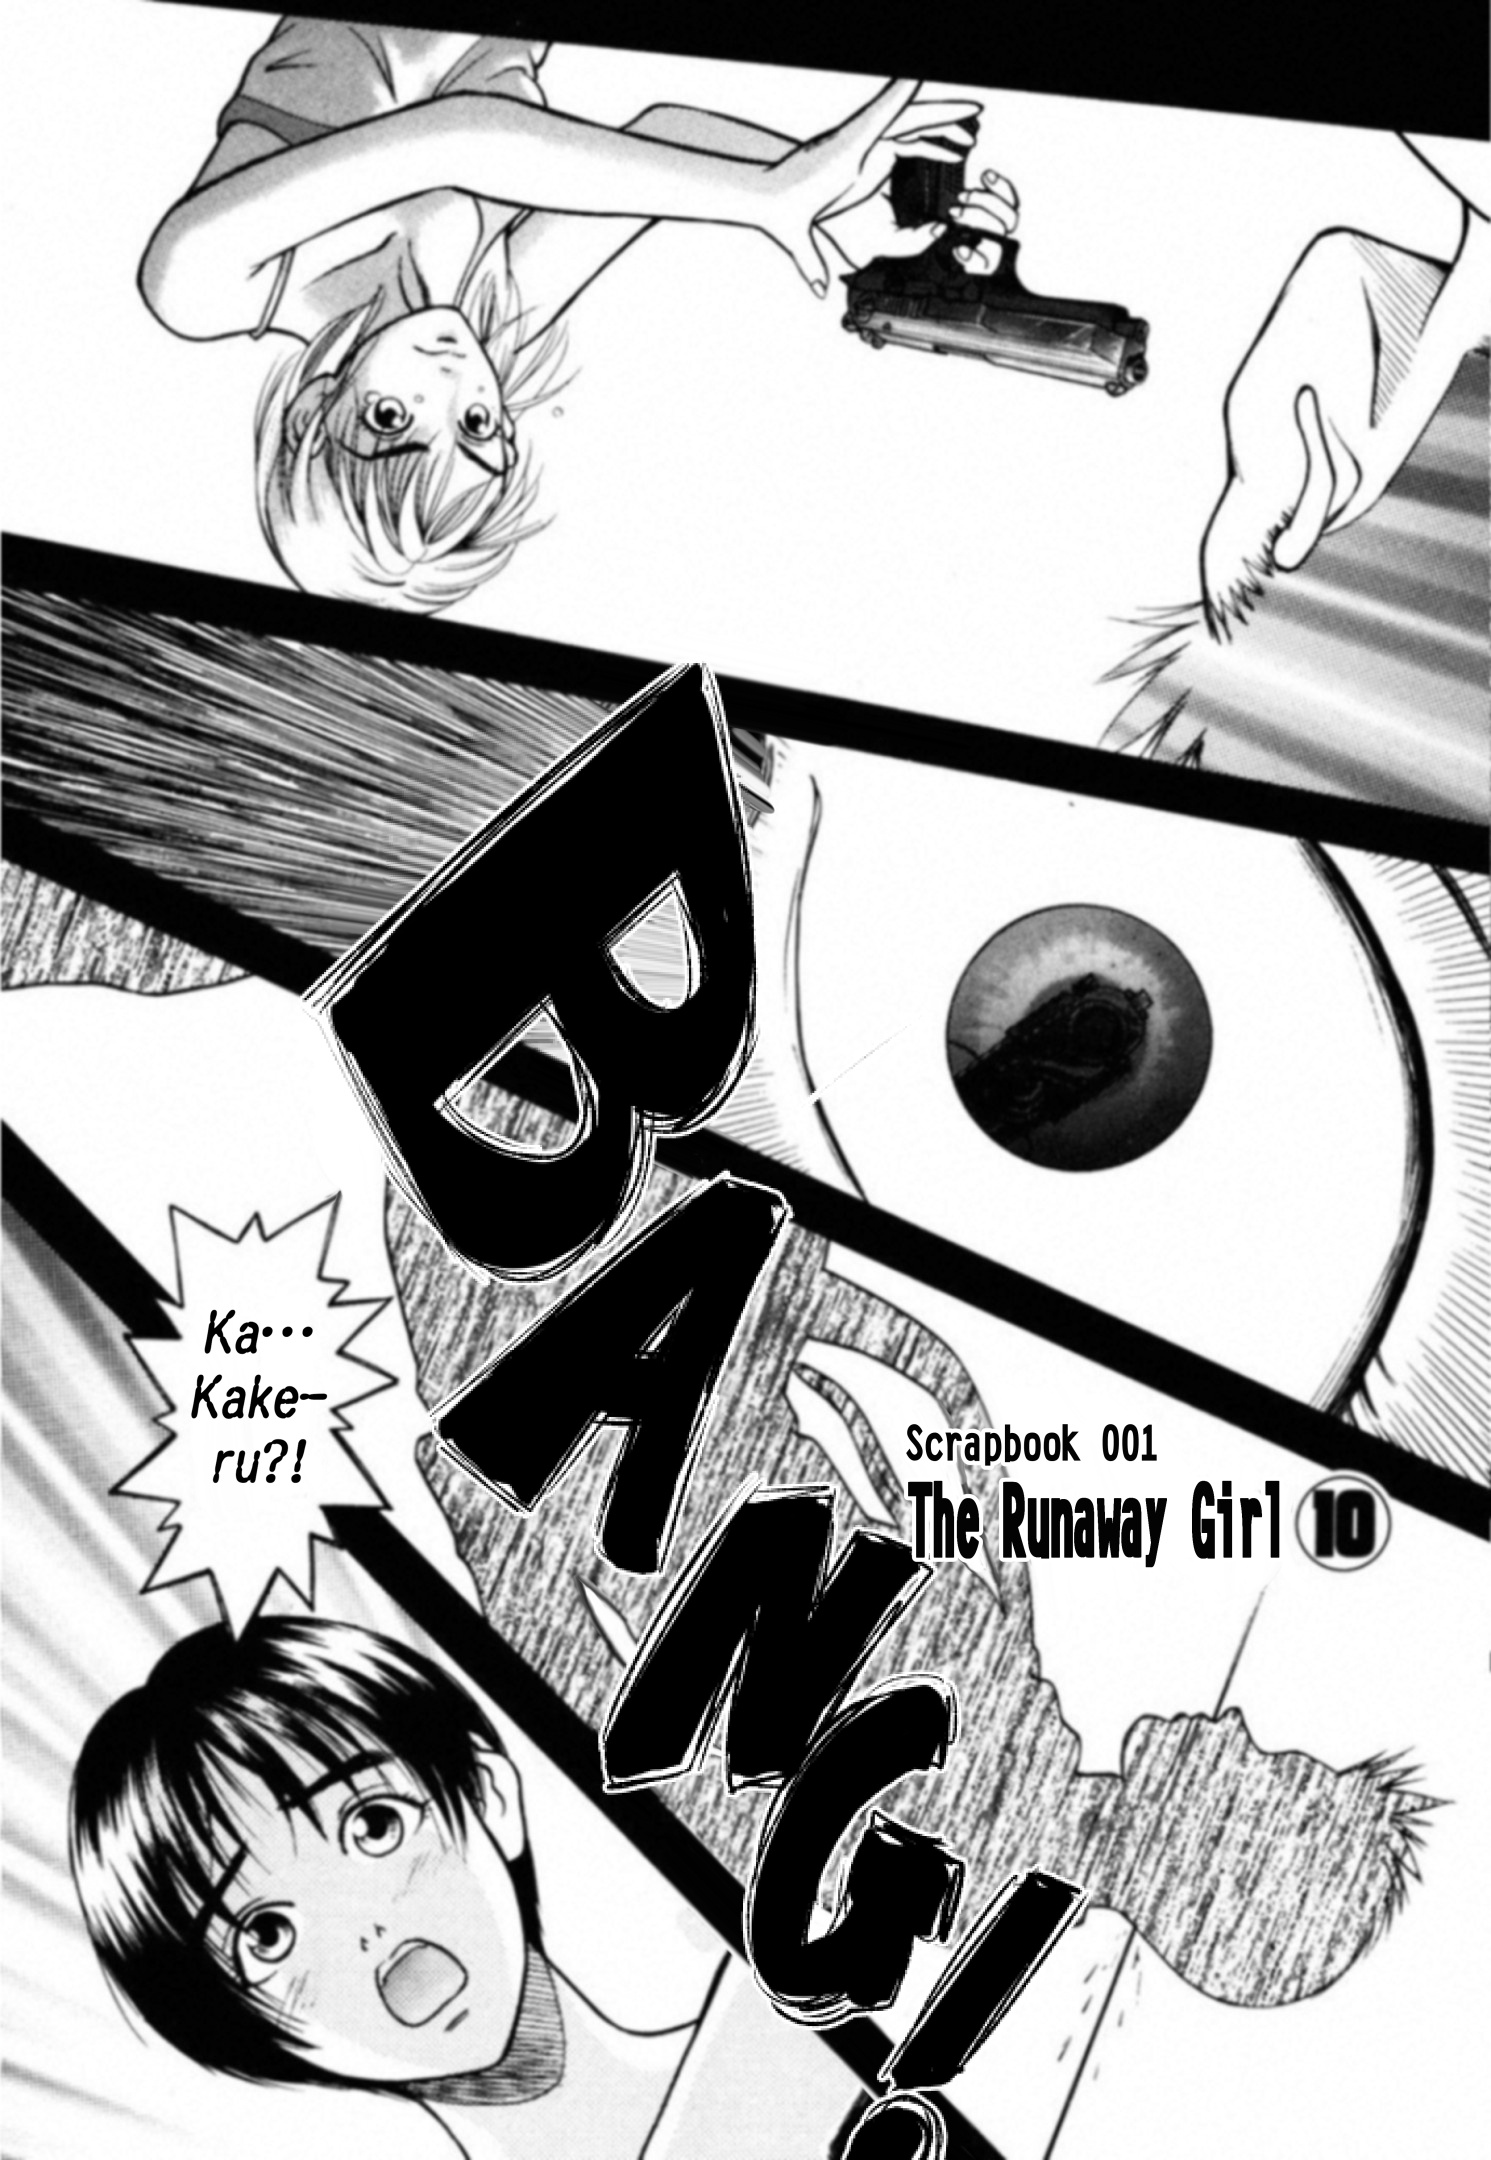 Kakeru Vol.1 Chapter 10: The Runaway Girl - 10 - Picture 1